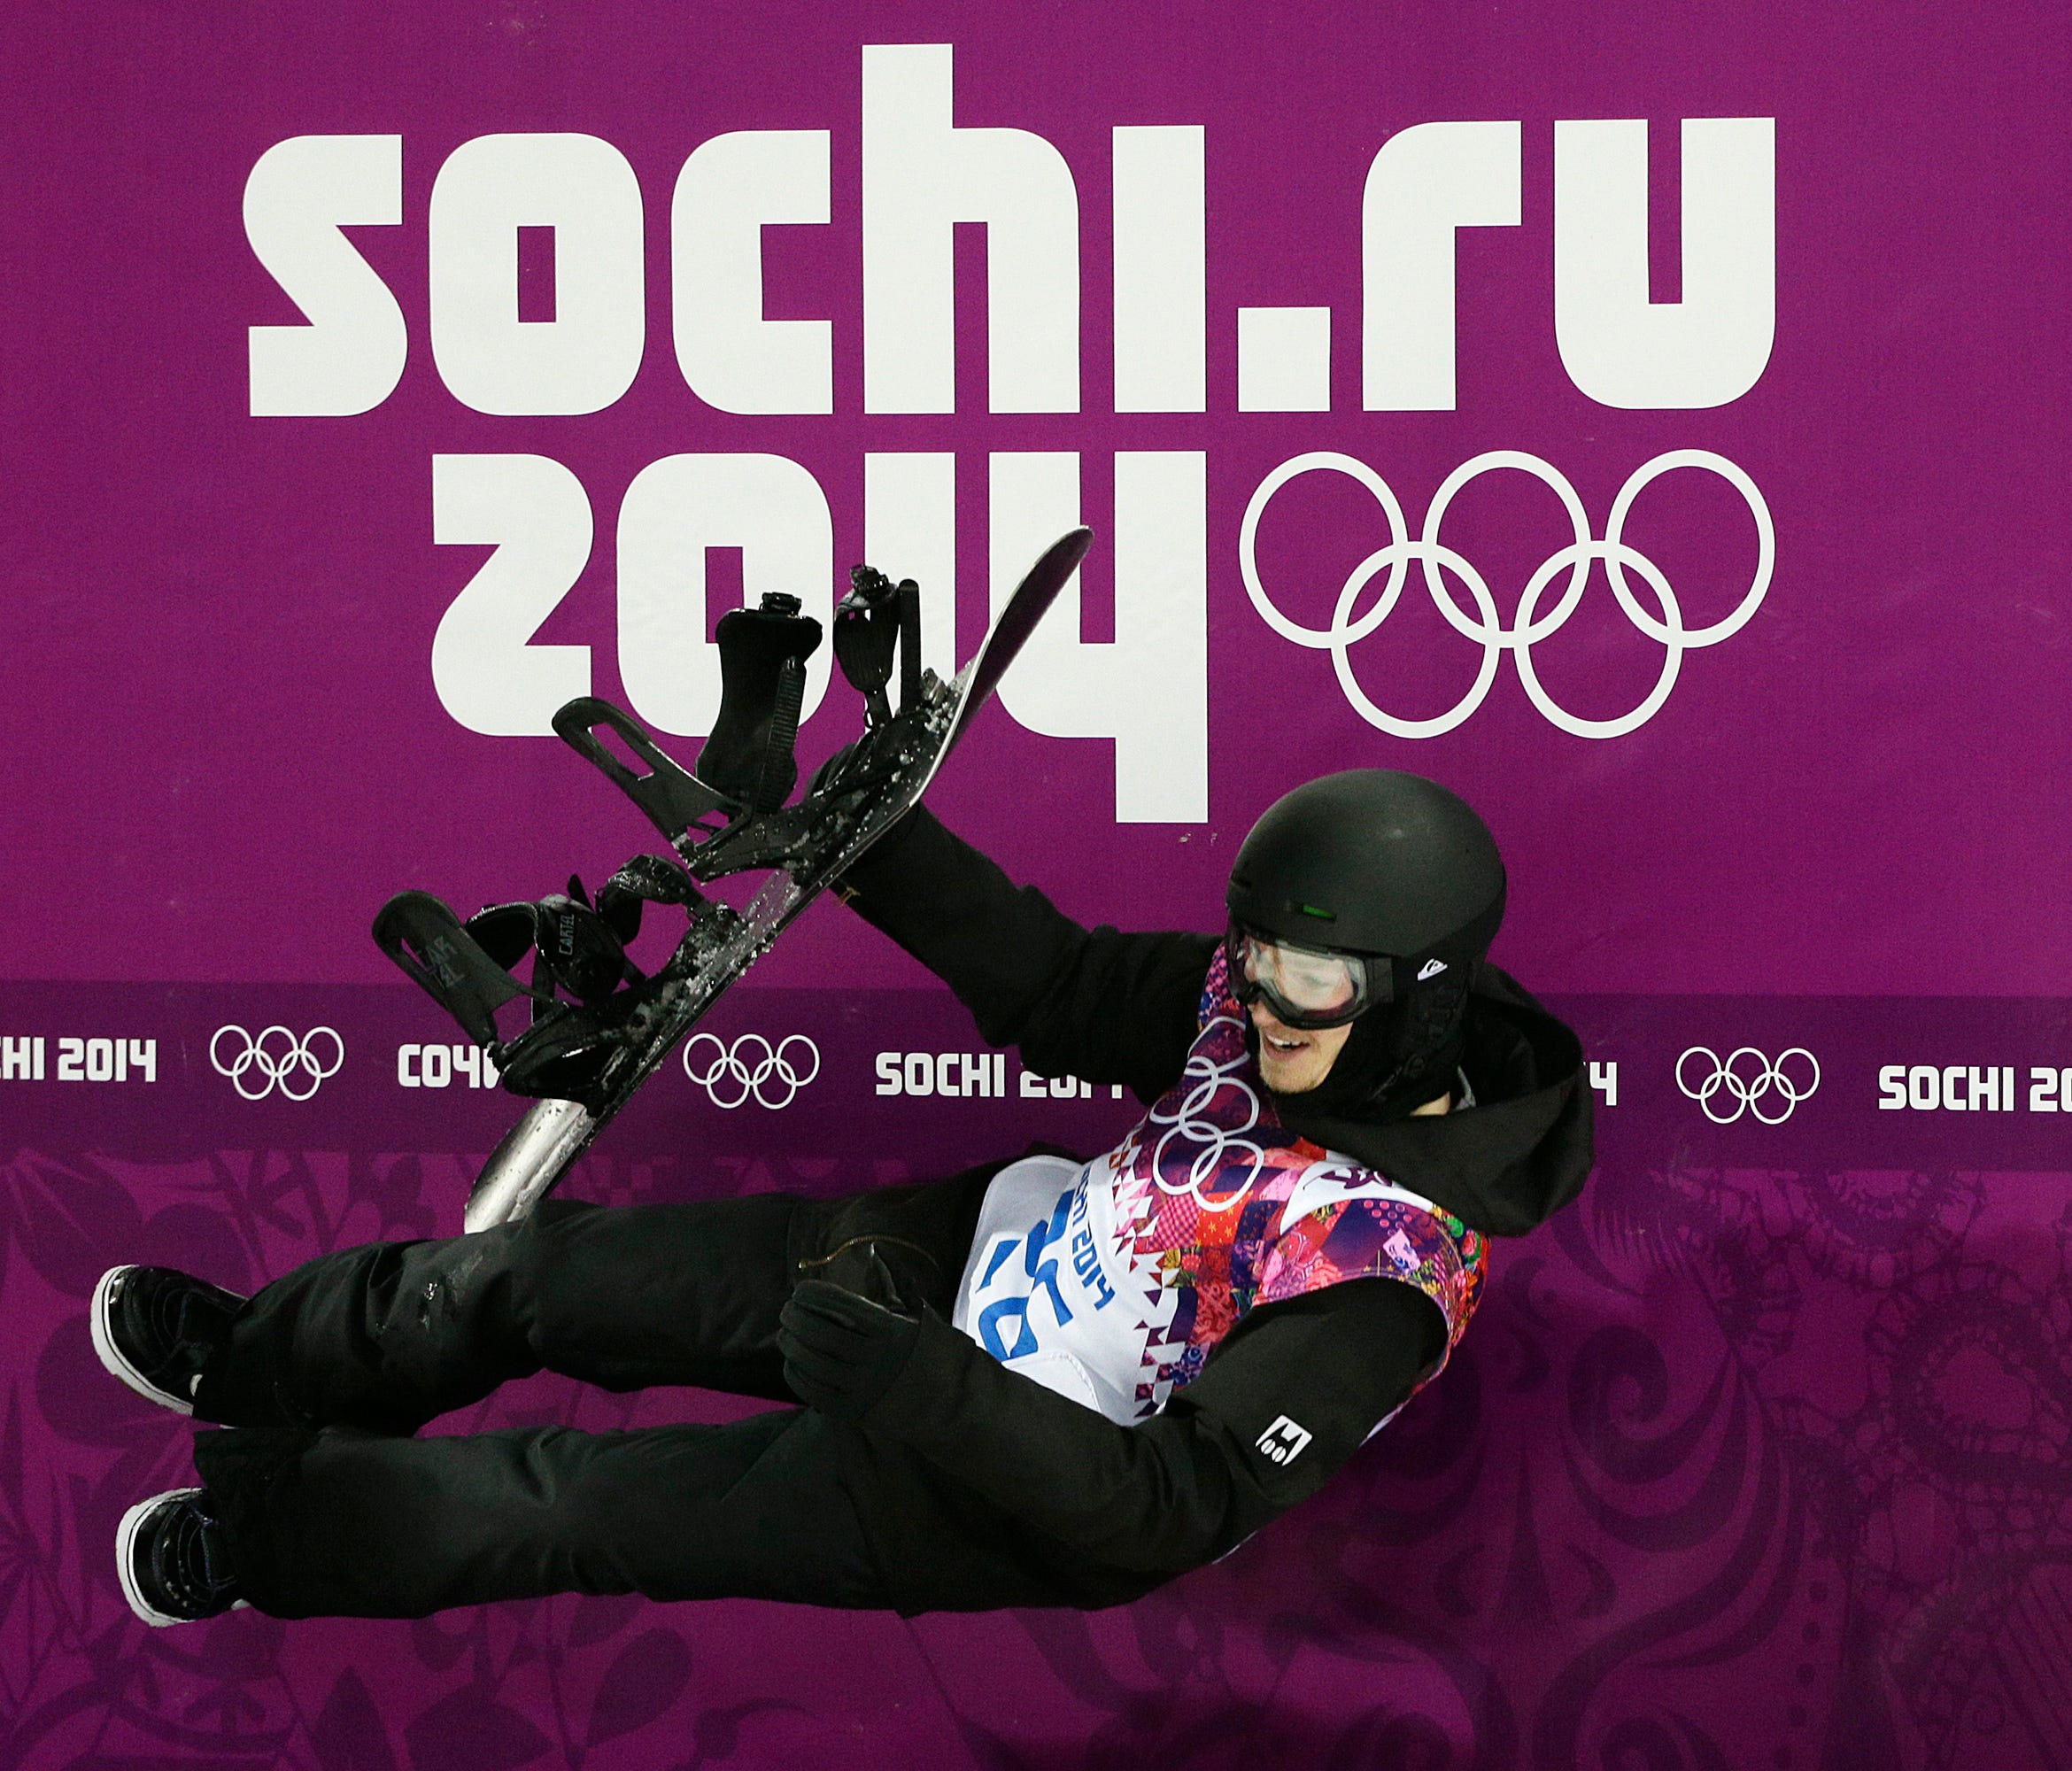 Switzerland's Iouri Podladtchikov won a gold medal at the Sochi Olympics